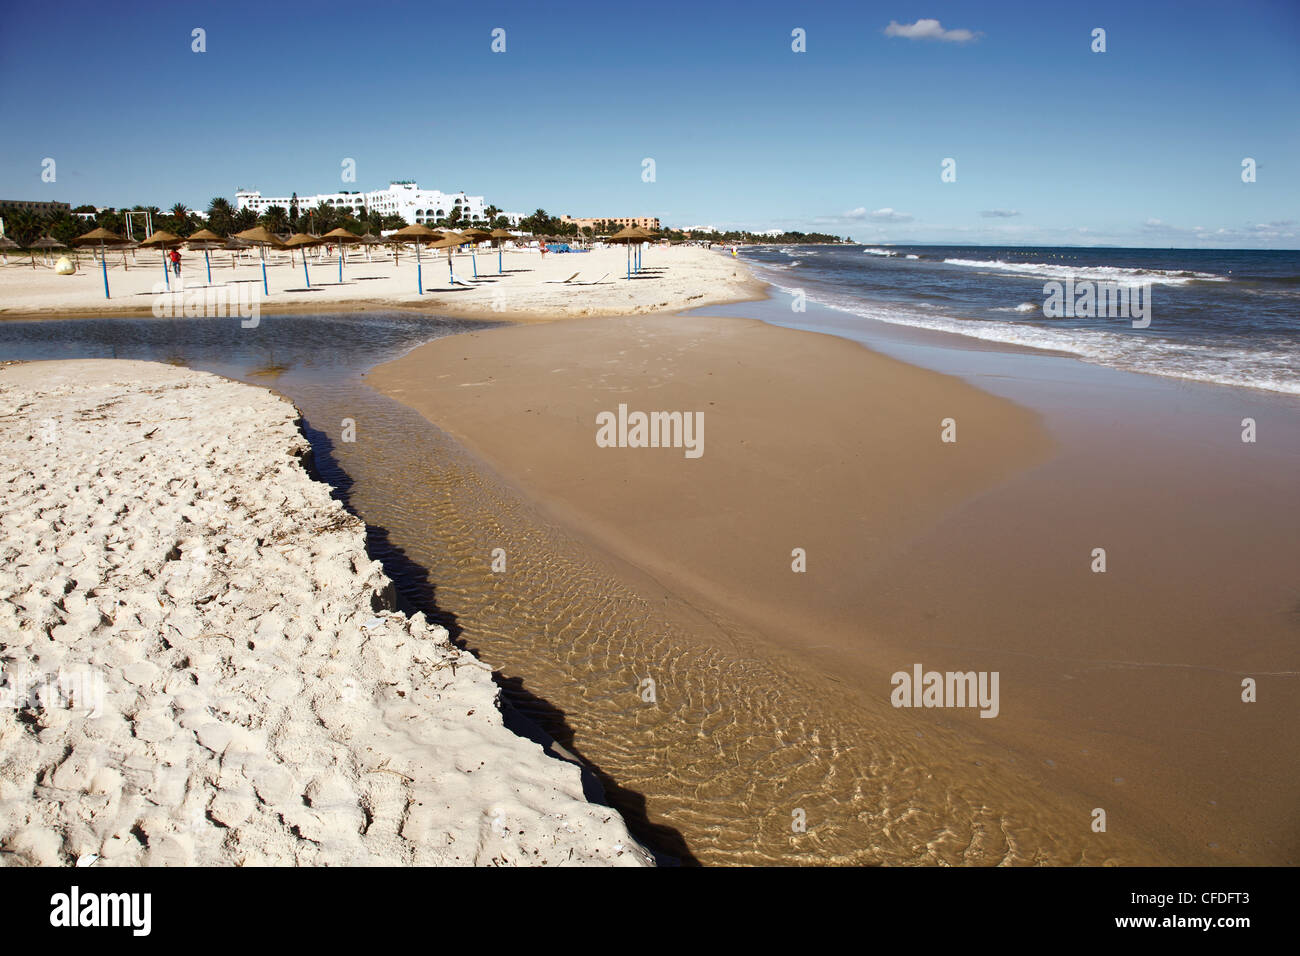 Beach scene in the tourist zone on the Mediterranean Sea, Sousse, Gulf of Hammamet, Tunisia, North Africa, Africa Stock Photo